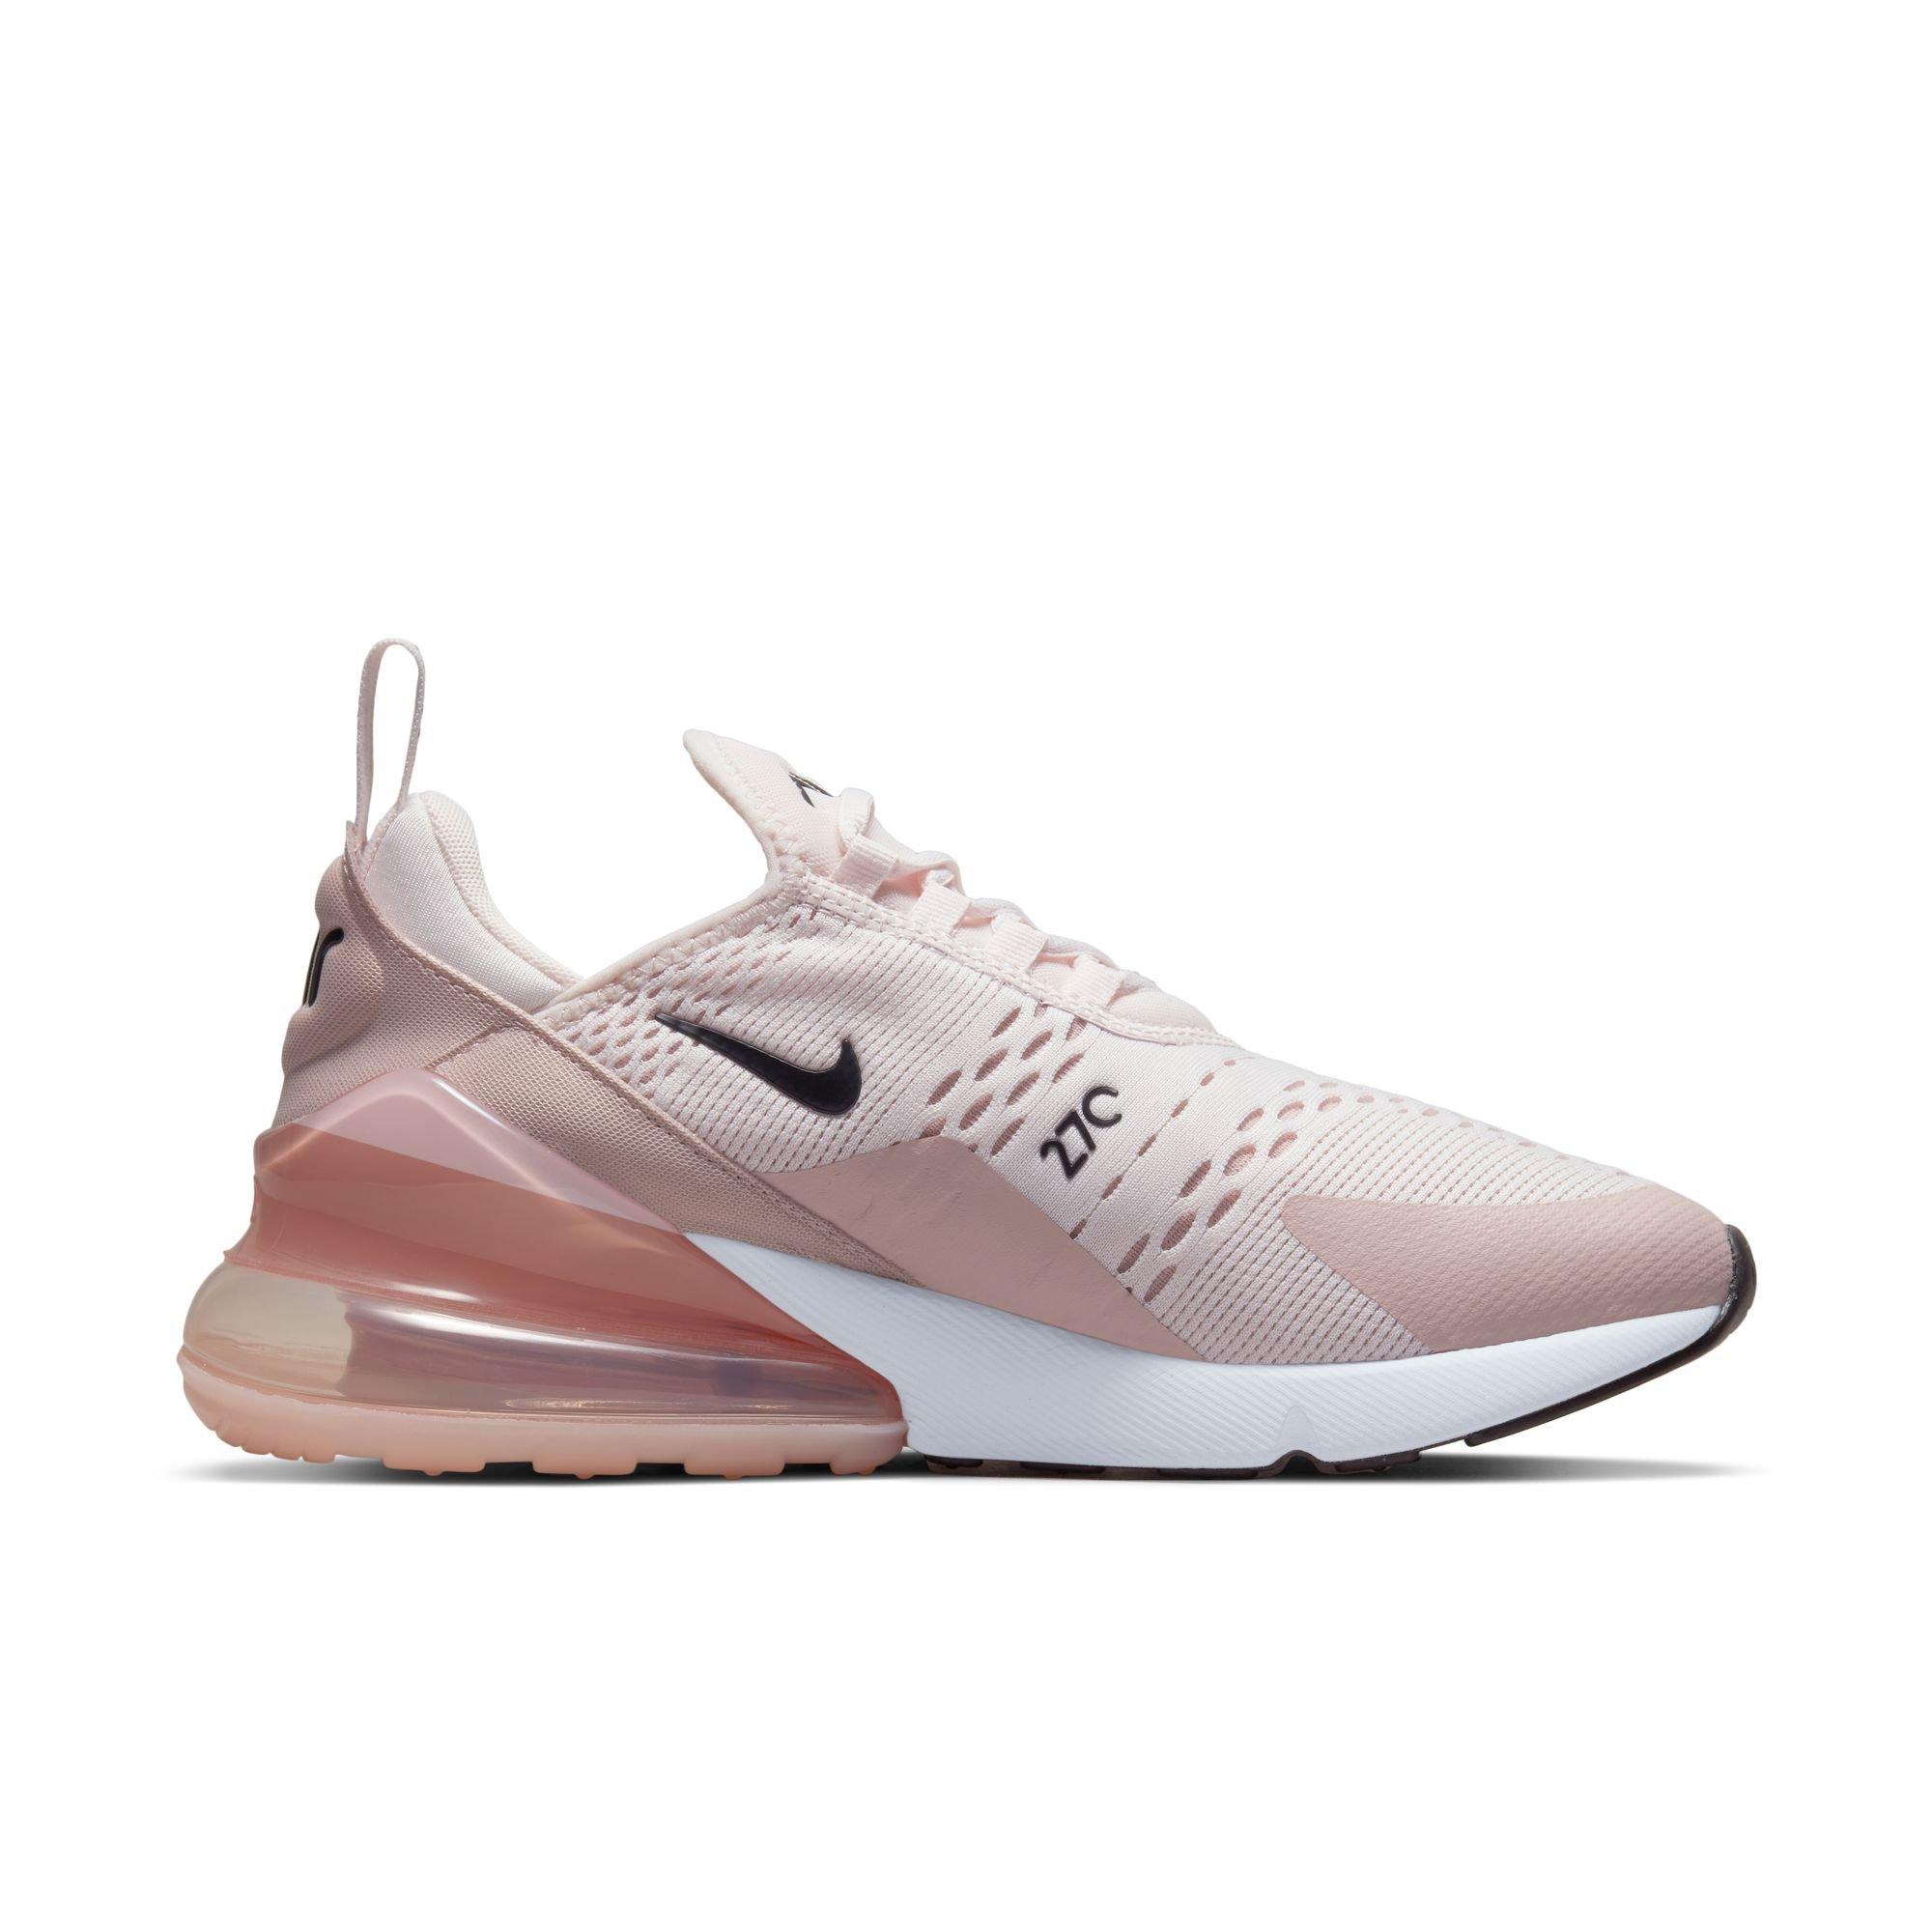 Whirlpool Mysterieus creatief Nike Air Max 270 "Light Soft Pink/Black/Pink Oxford" Women's Shoe